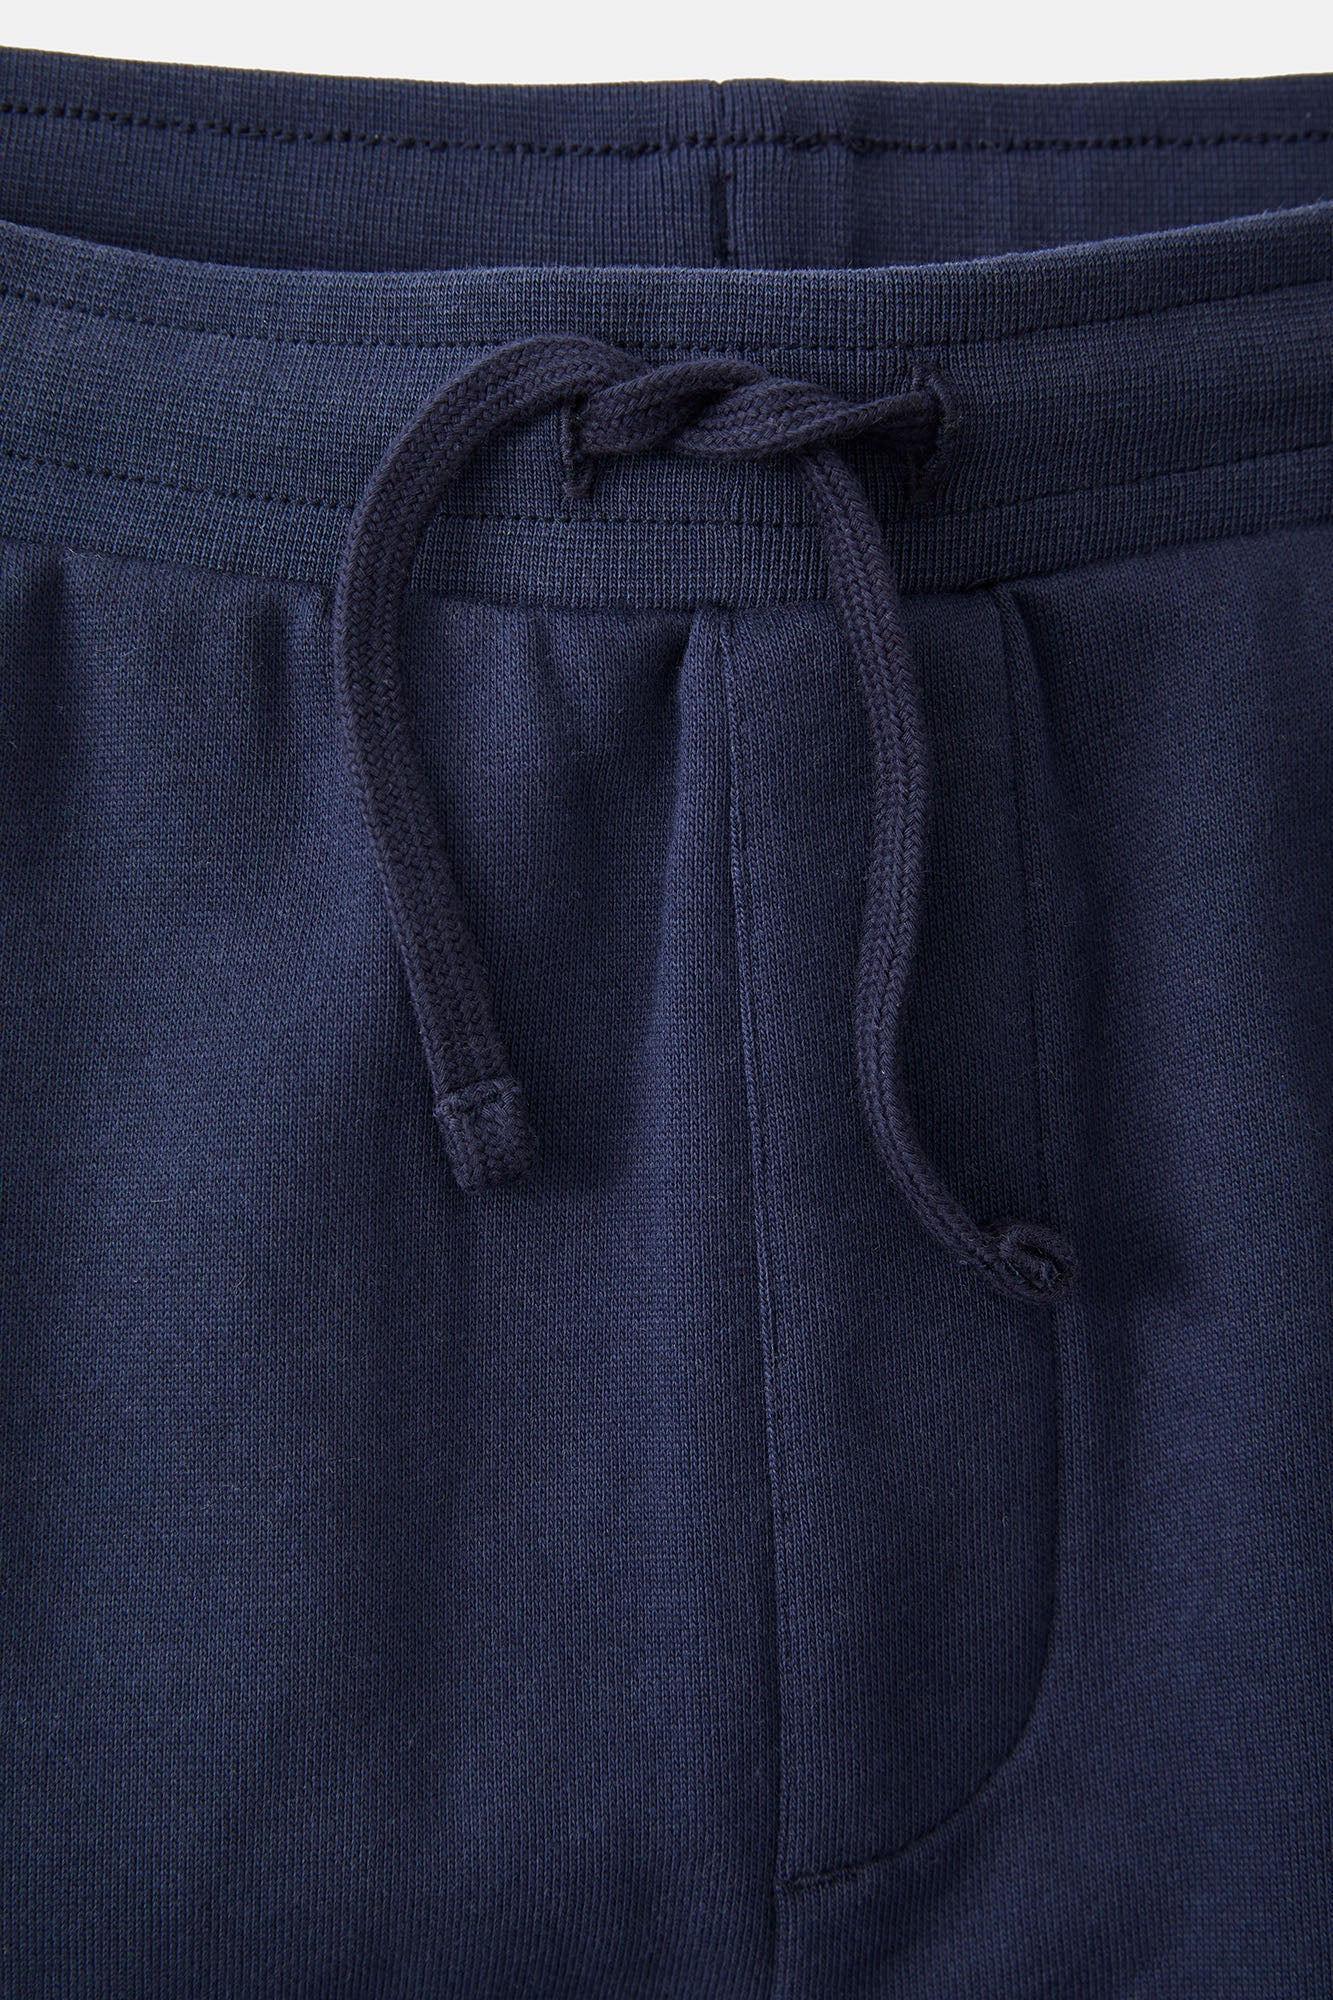 Katin Lounge Pant | Navy close up